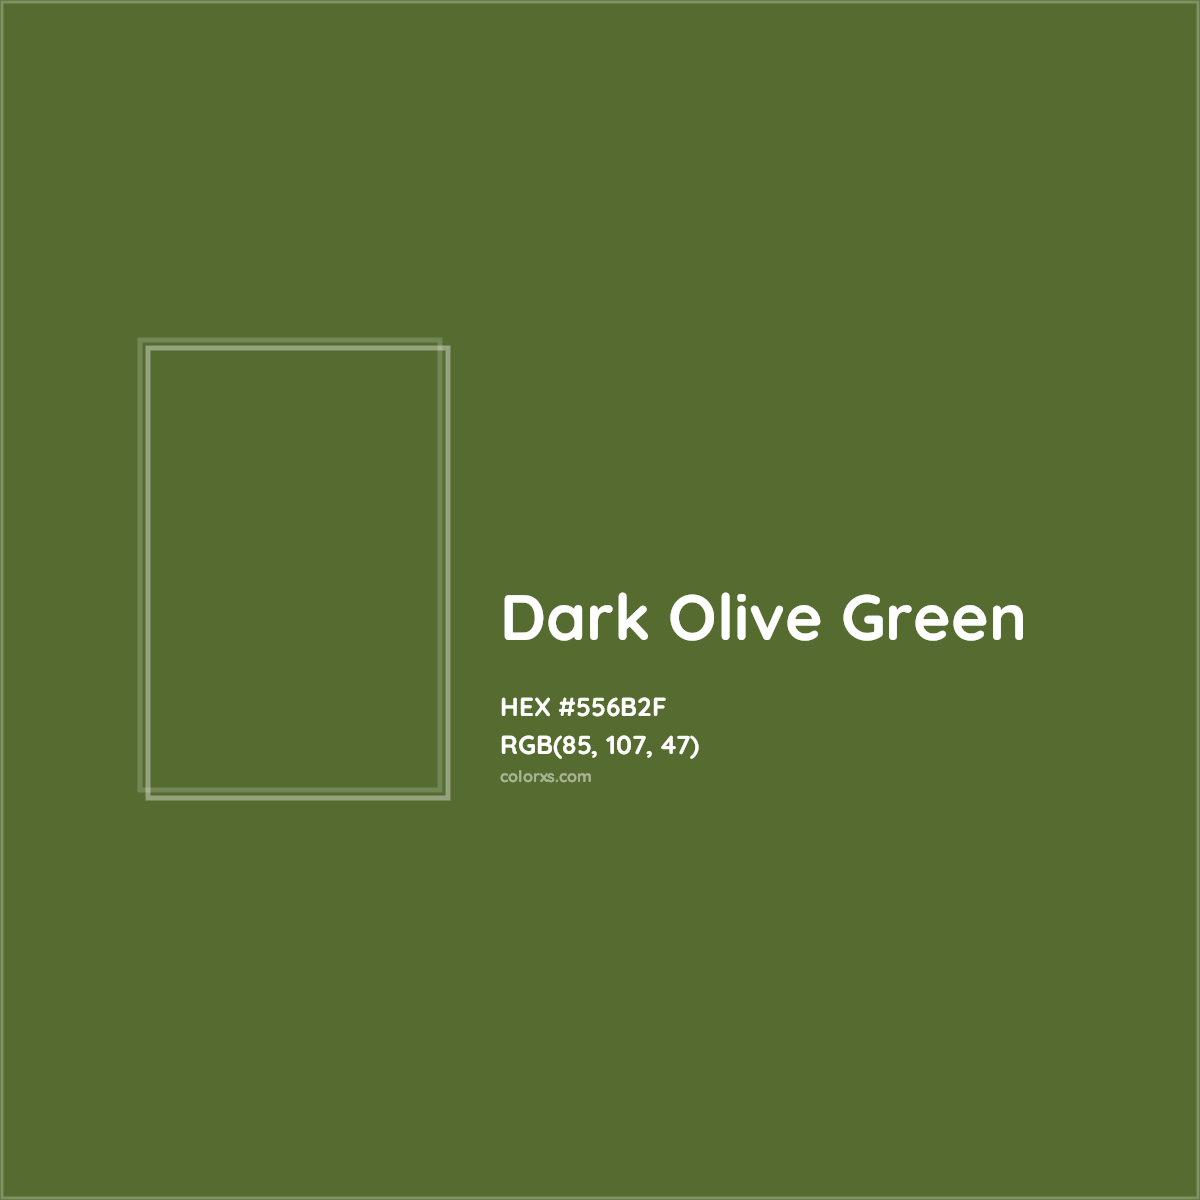 Dark Olive Green #3f4409 color hex codes and harmonies - Dark Army Green,  Verdun Green, Brownish Green, Not Quite Black, Dark Olive Cammo, Camouflage  Green